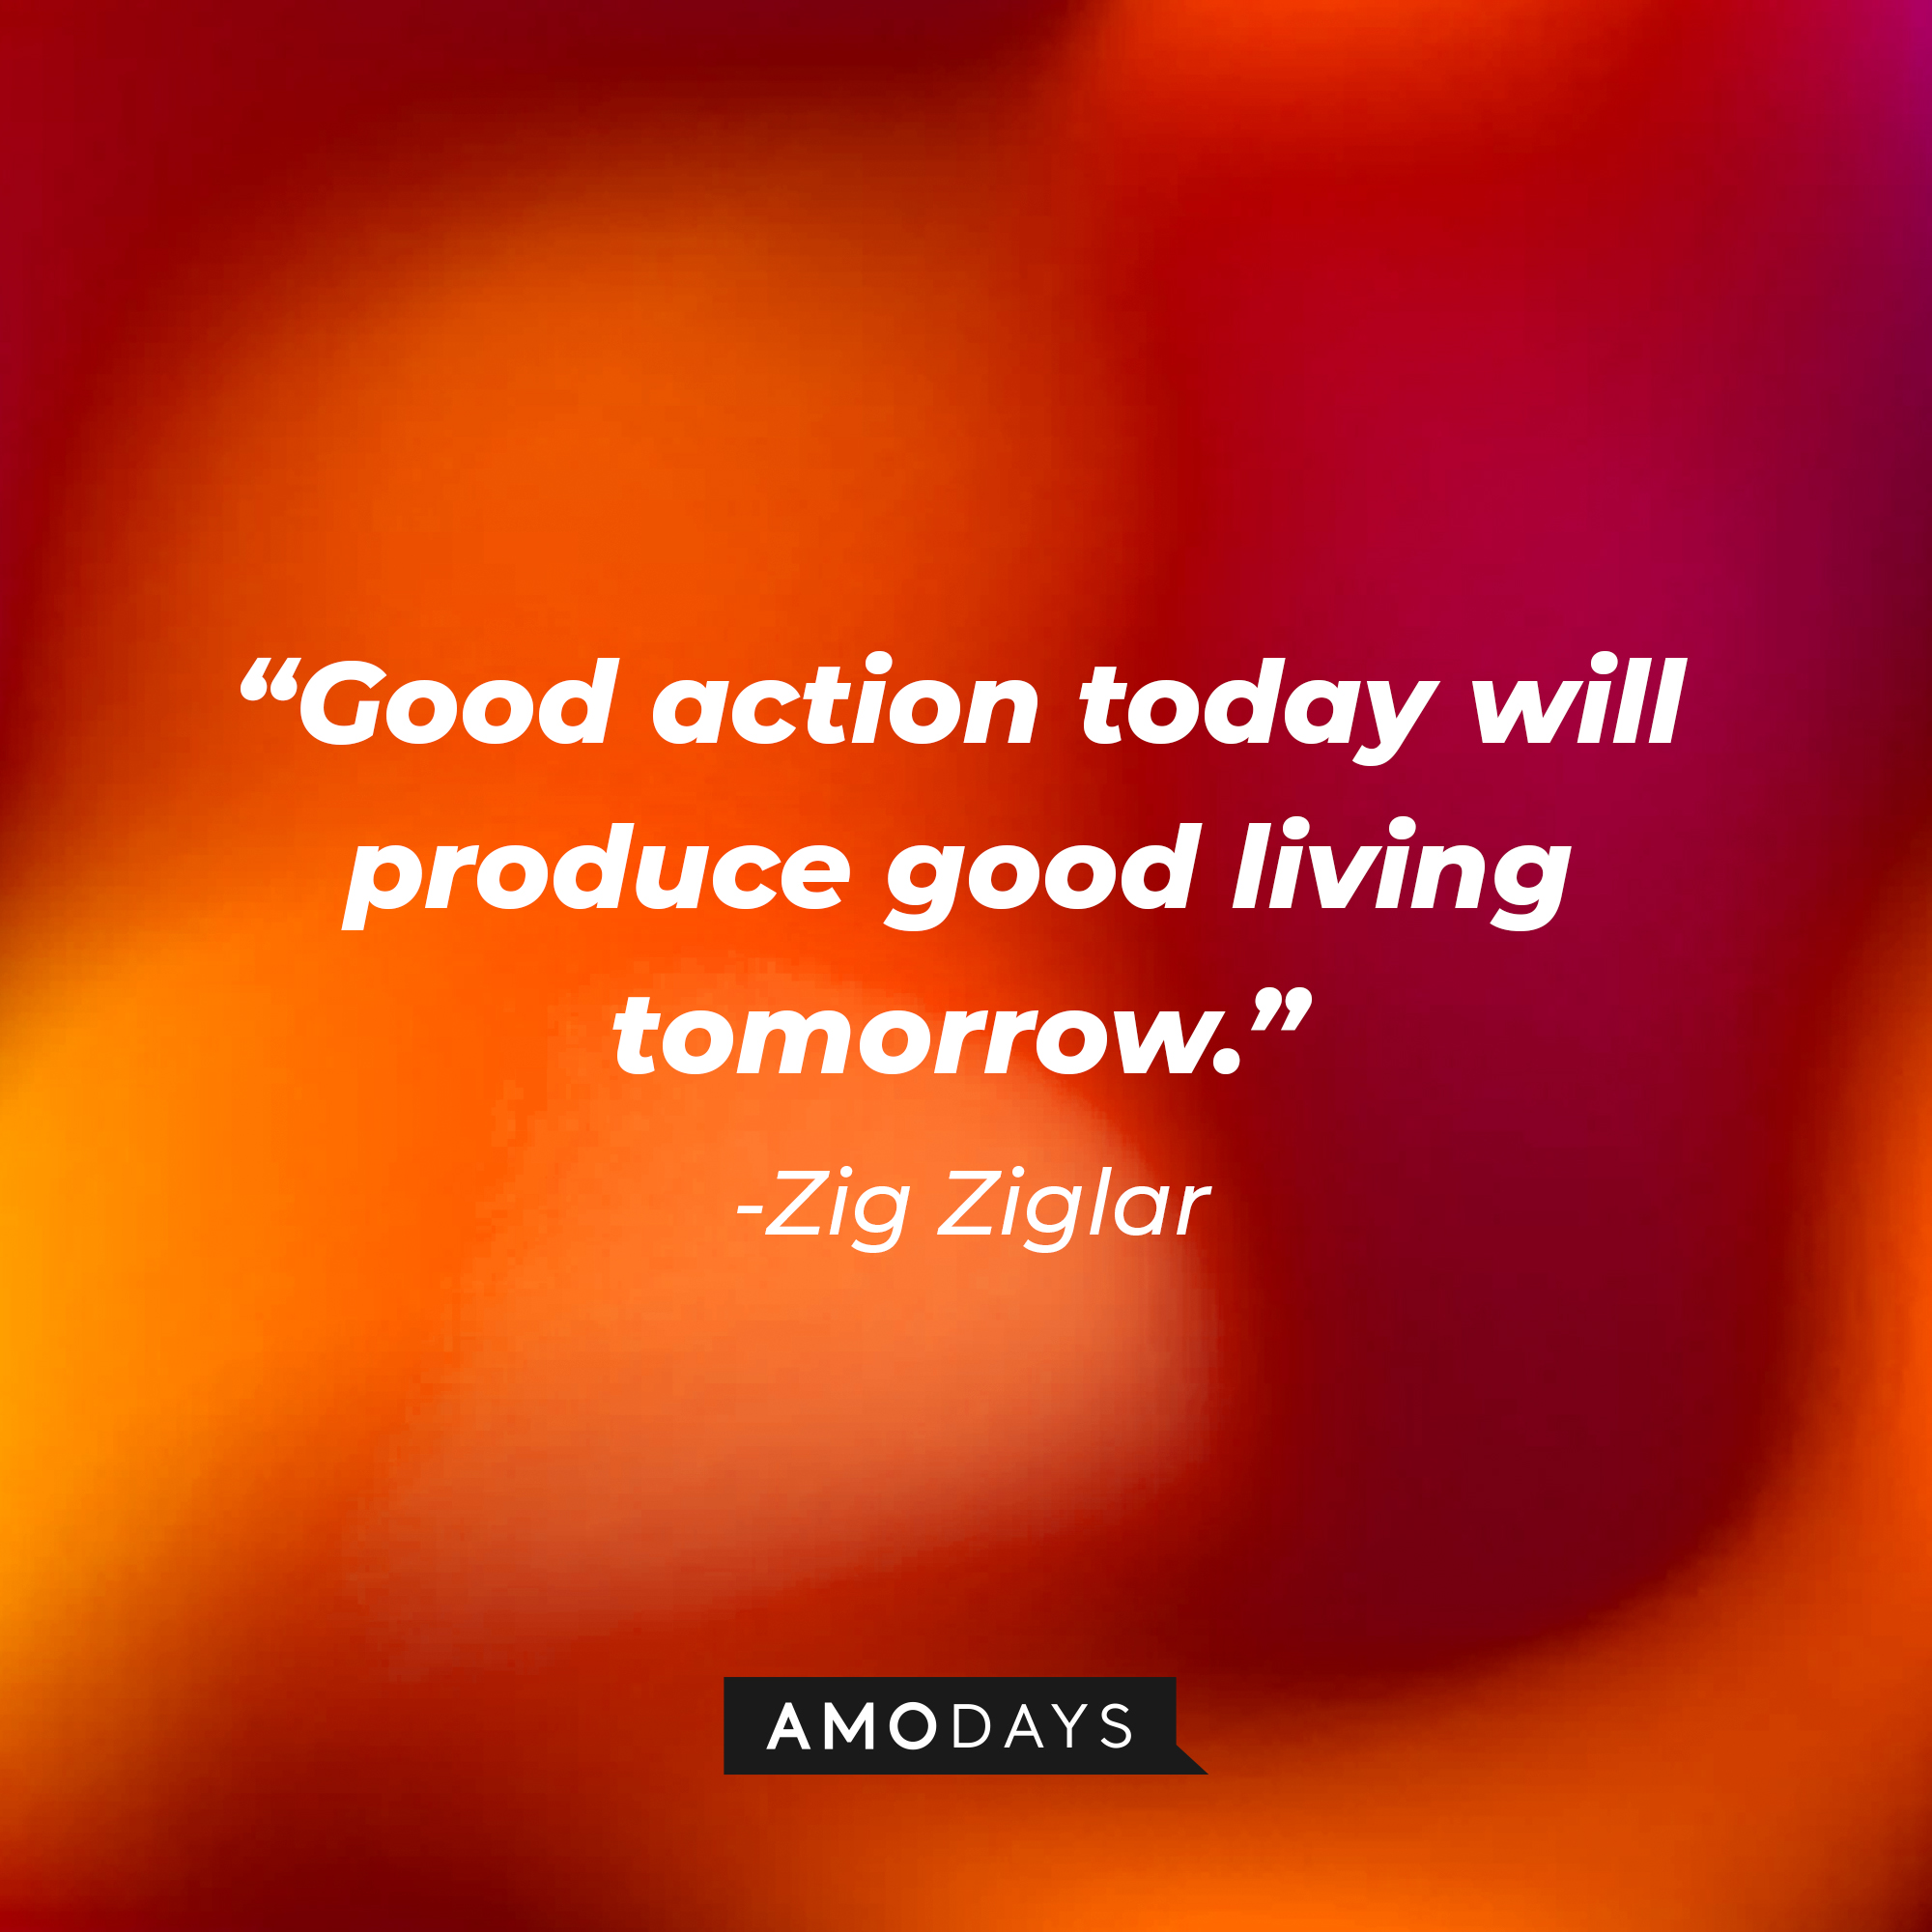 Zig Ziglar's quote: "Good action today will produce good living tomorrow." | Image: Amodays